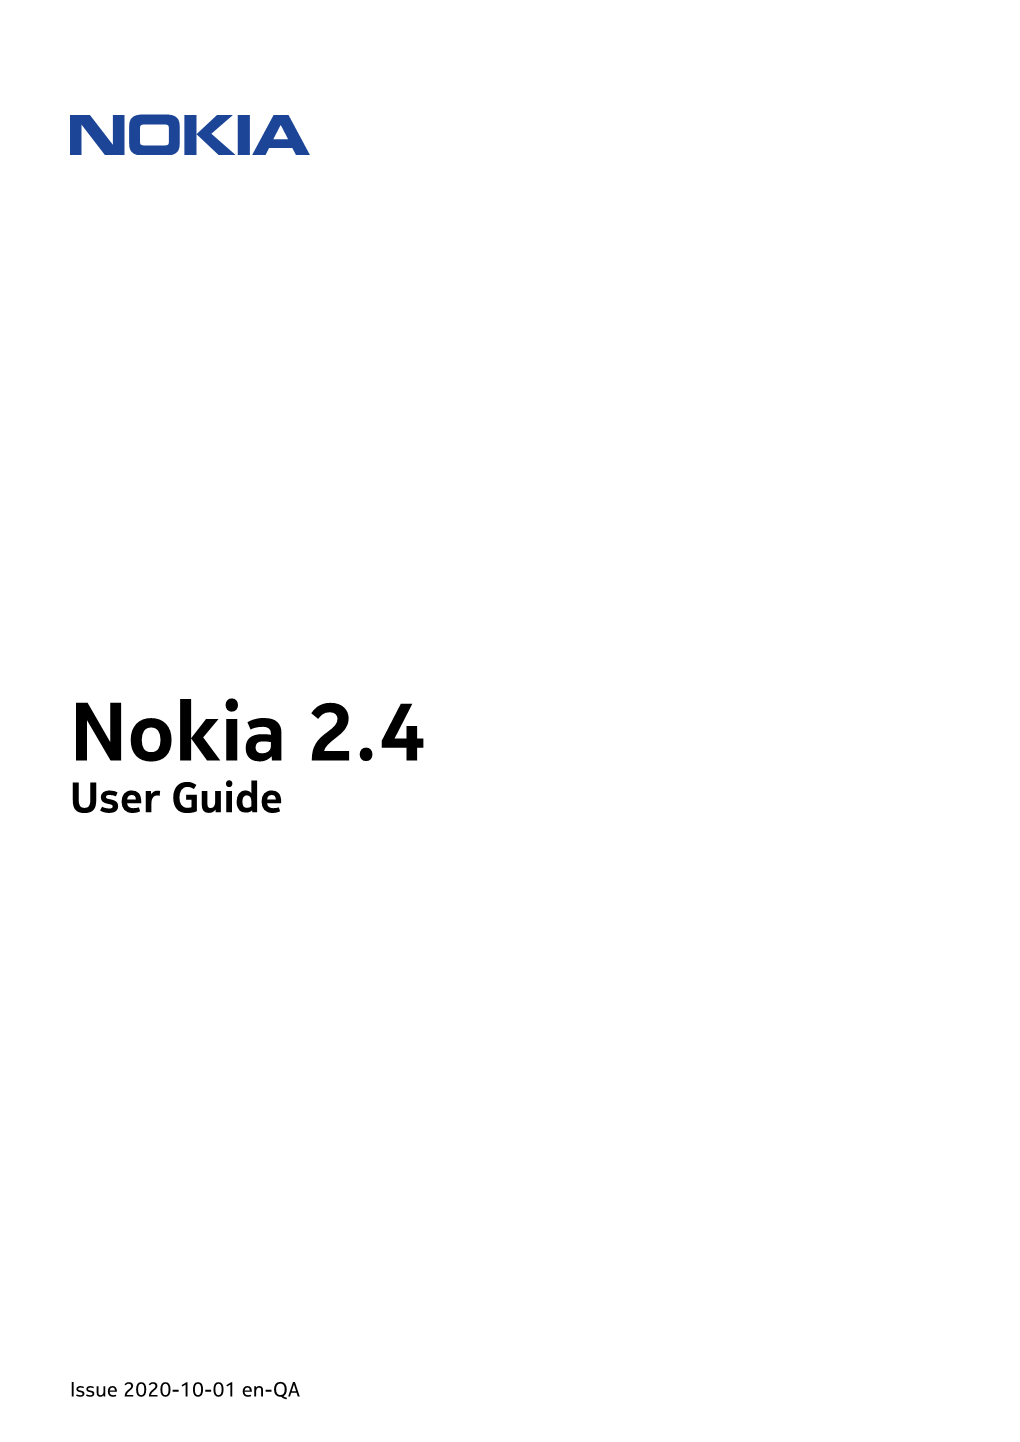 Nokia 2.4 User Guide